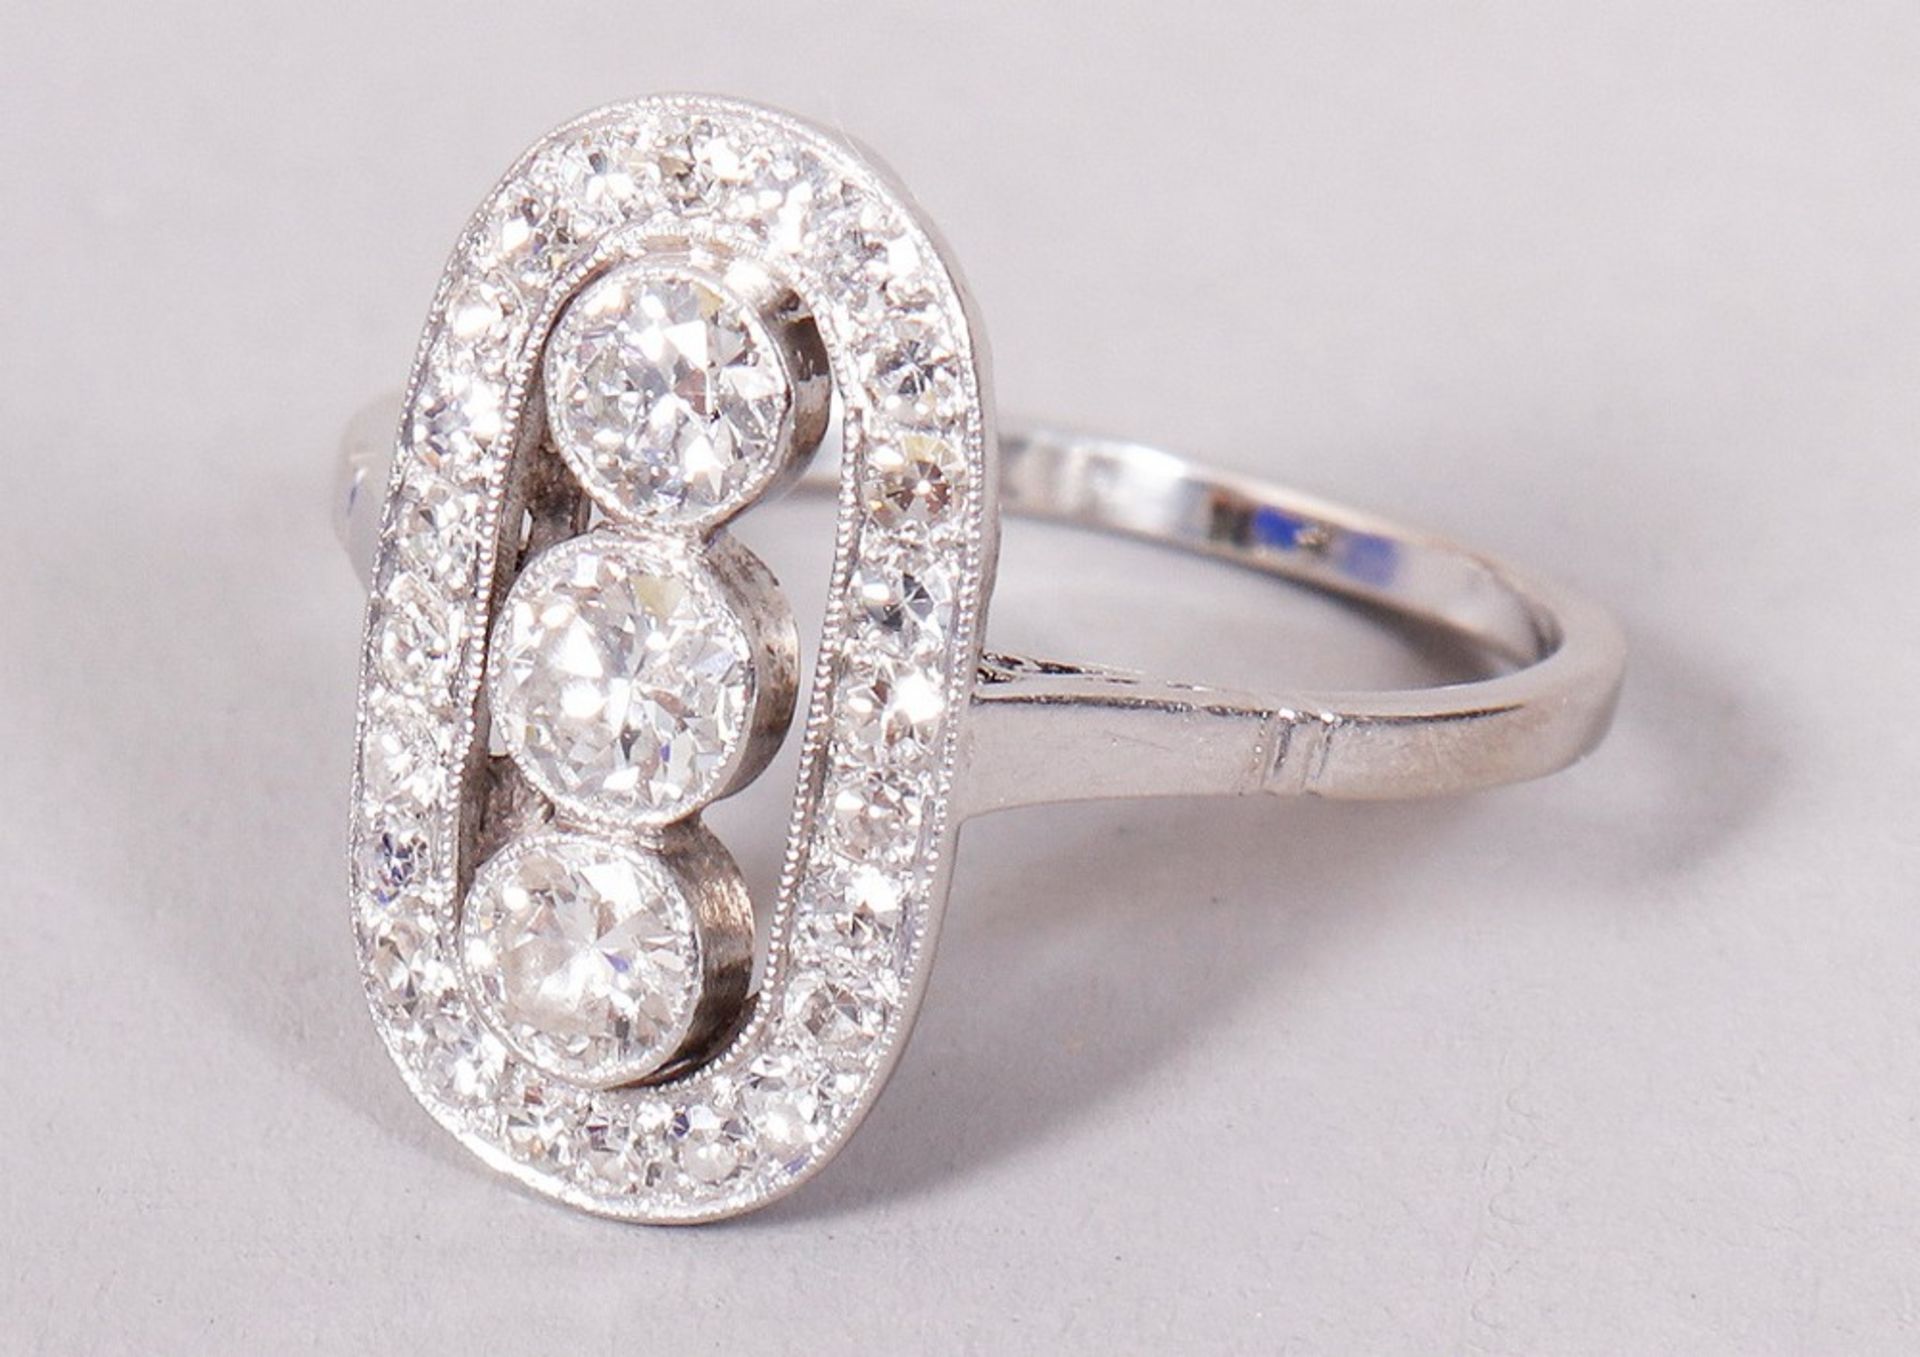 Art Deco ring, 900 platinum and diamonds, 1920s/30s - Image 4 of 4